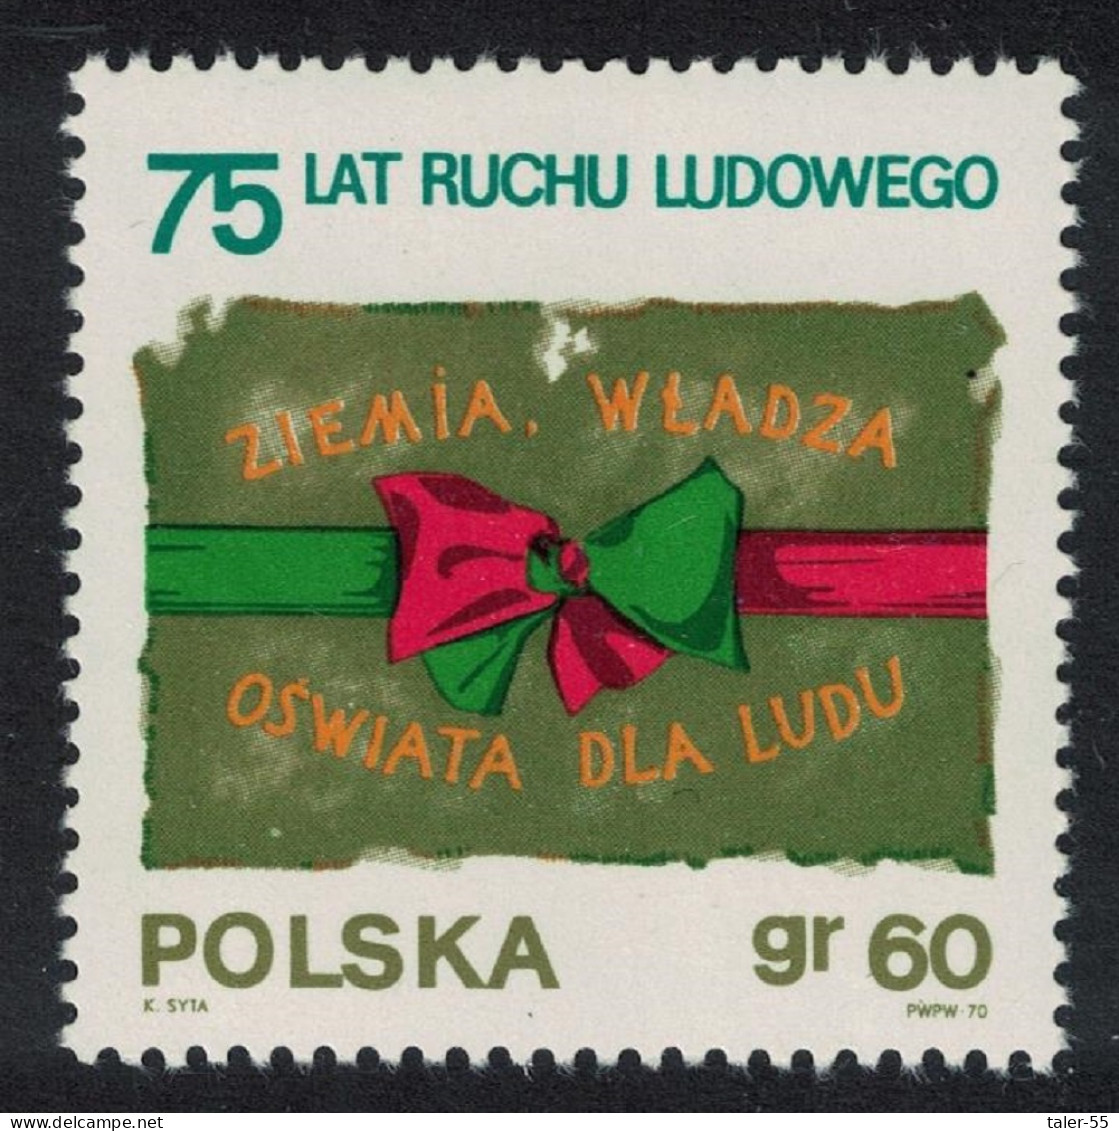 Poland 75th Anniversary Of Peasant Movement 1970 MNH SG#1987 - Ungebraucht